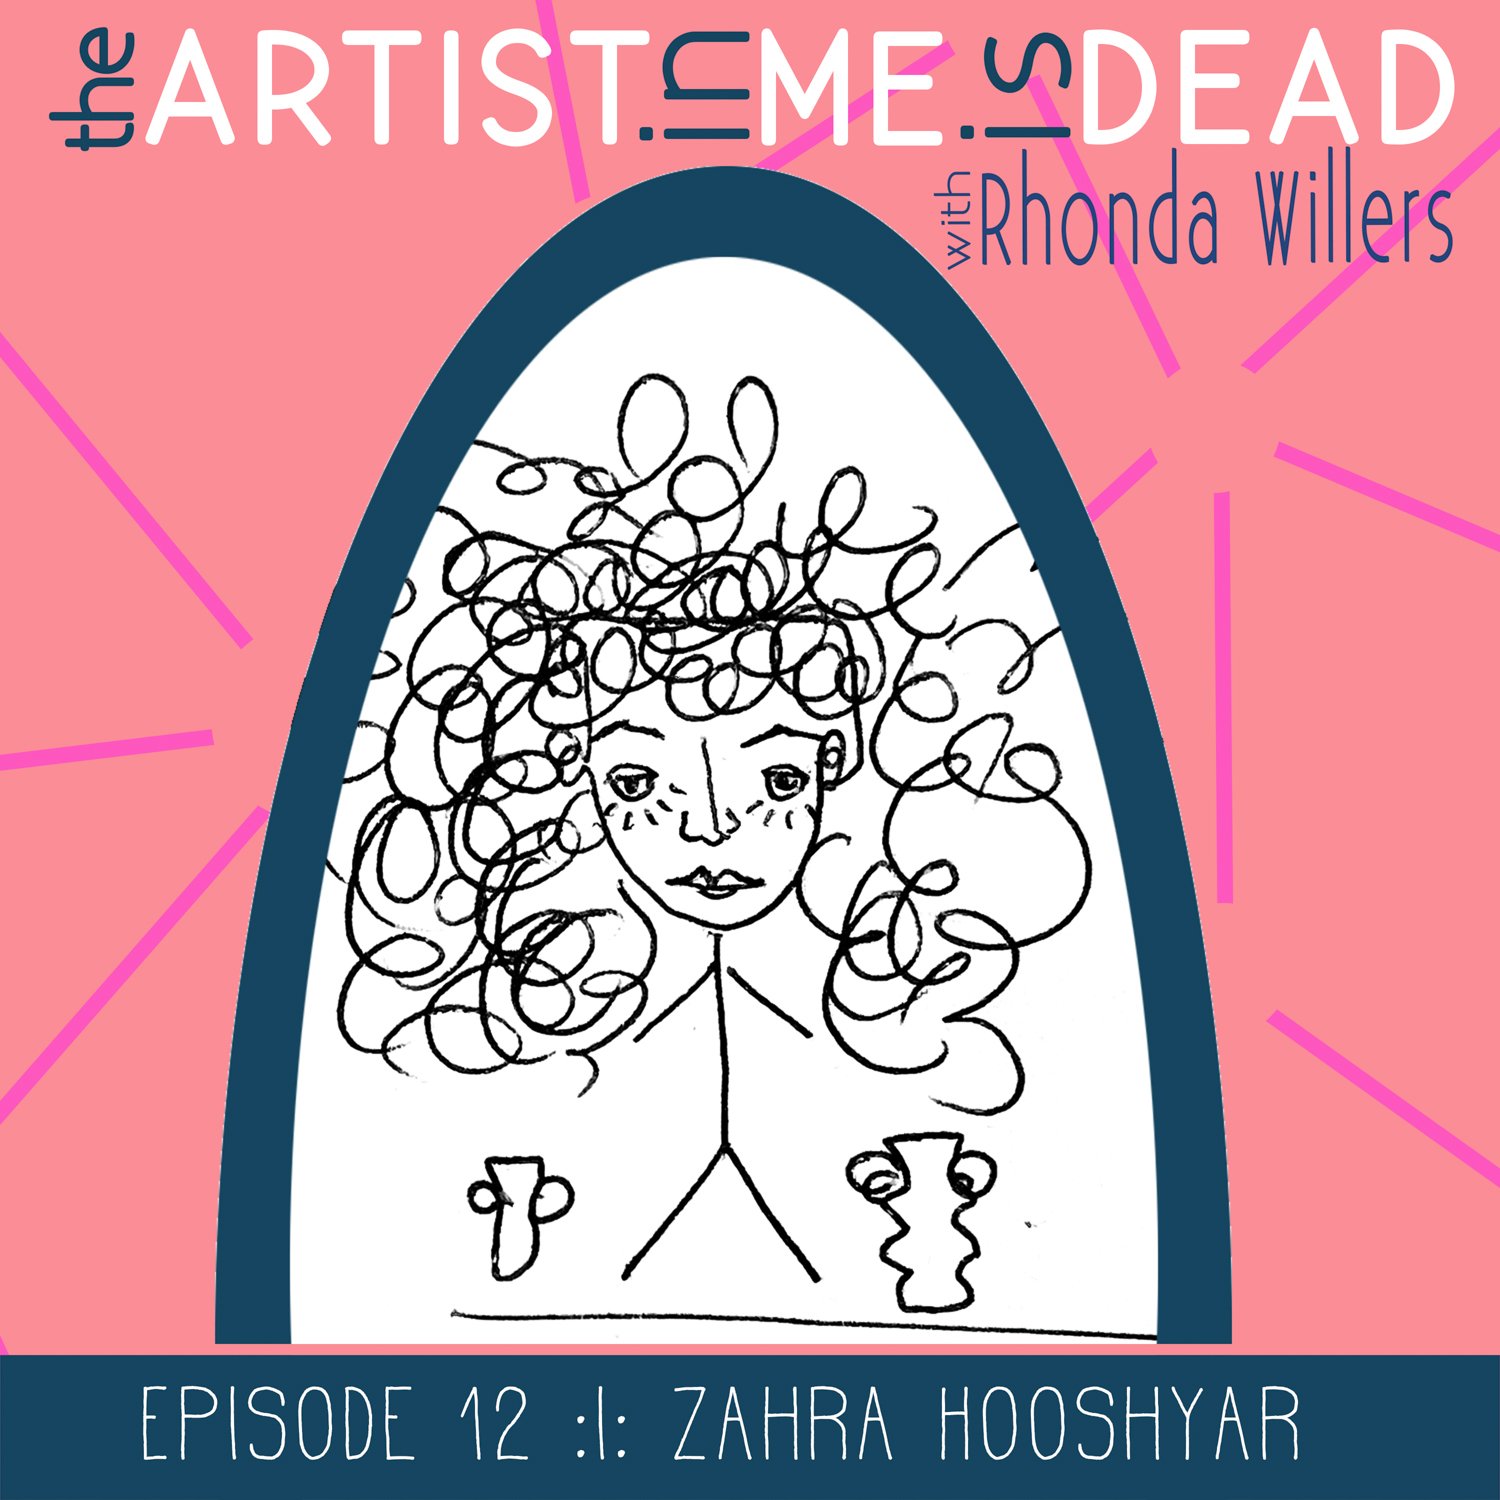 01_ep12_Zahra_Hooshyar_the-artist-in-me-is-dead-podcast_season1.jpeg